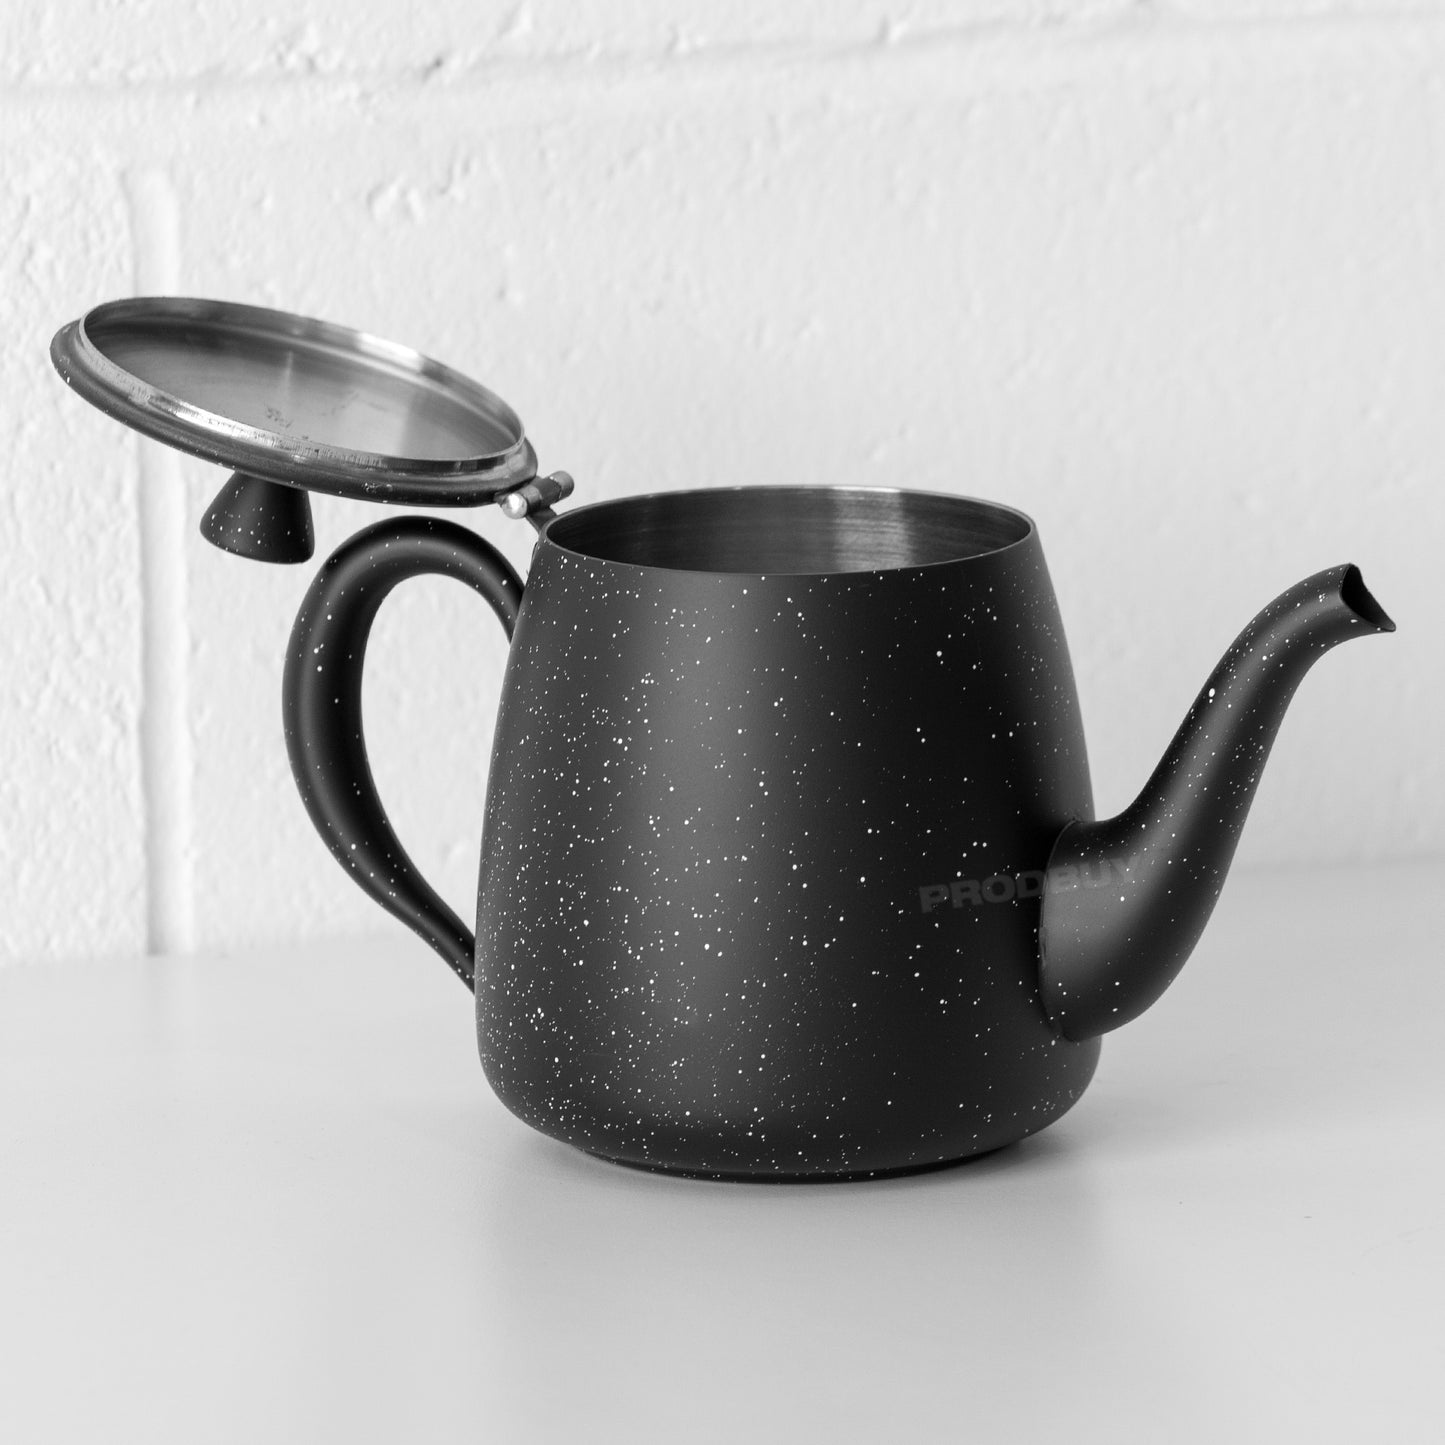 Black Stainless Steel 35oz Teapot